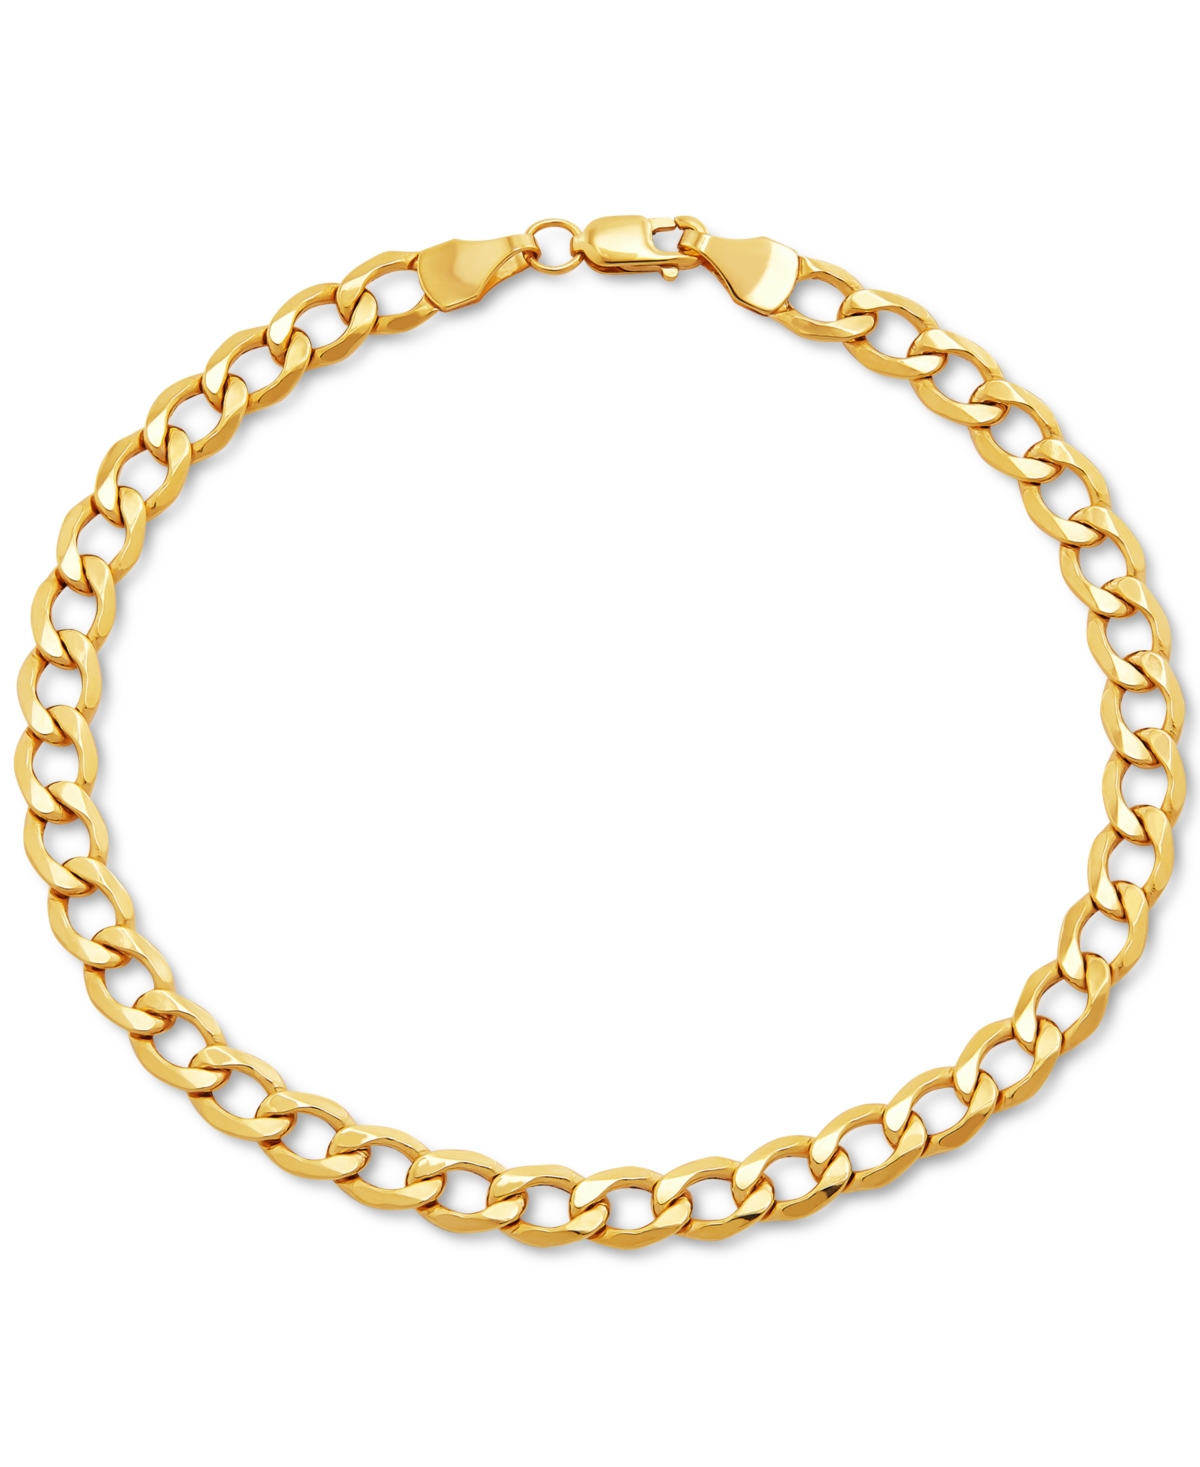 Cuban Link Chain Bracelet (5mm) in 10k Gold - Gold